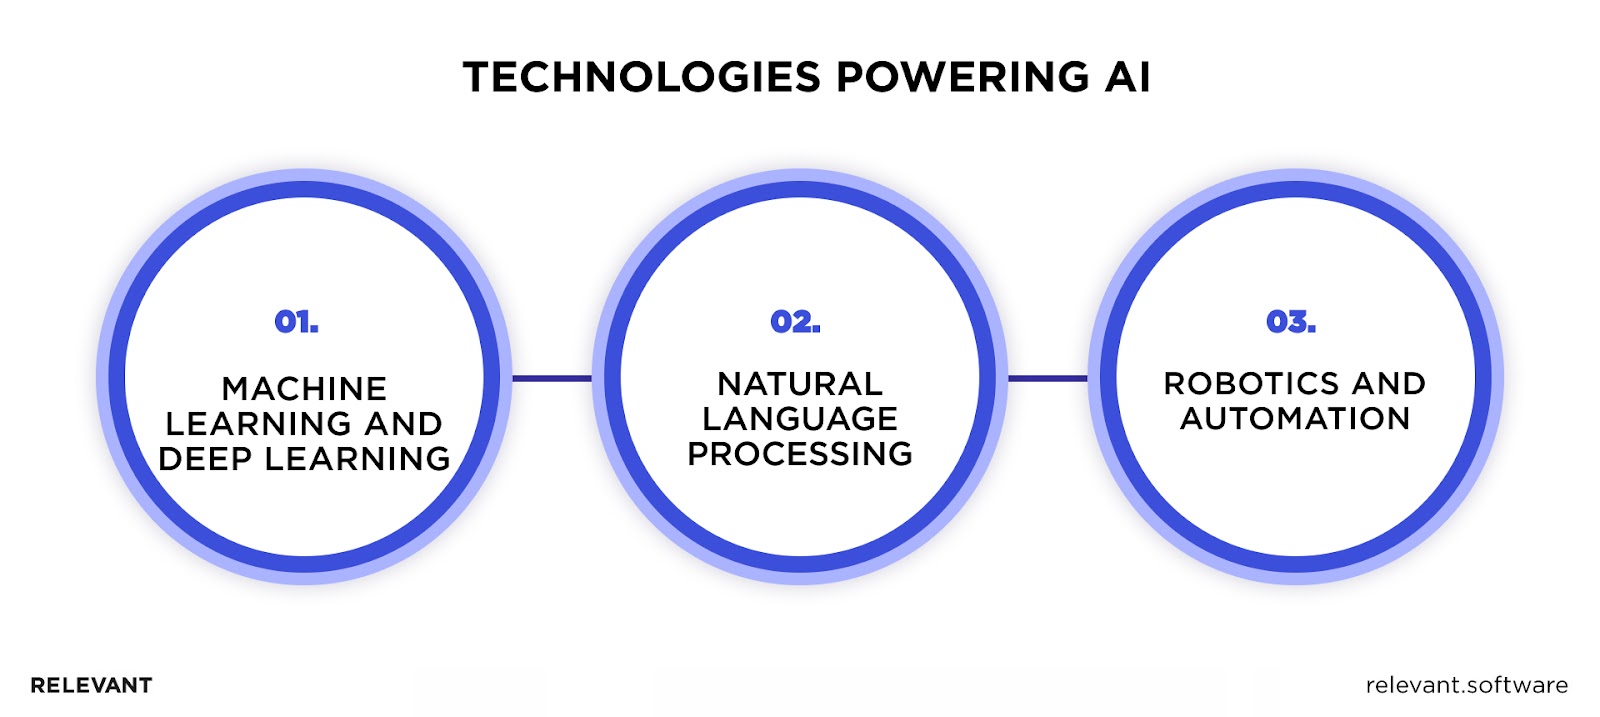 Technologies Powering AI